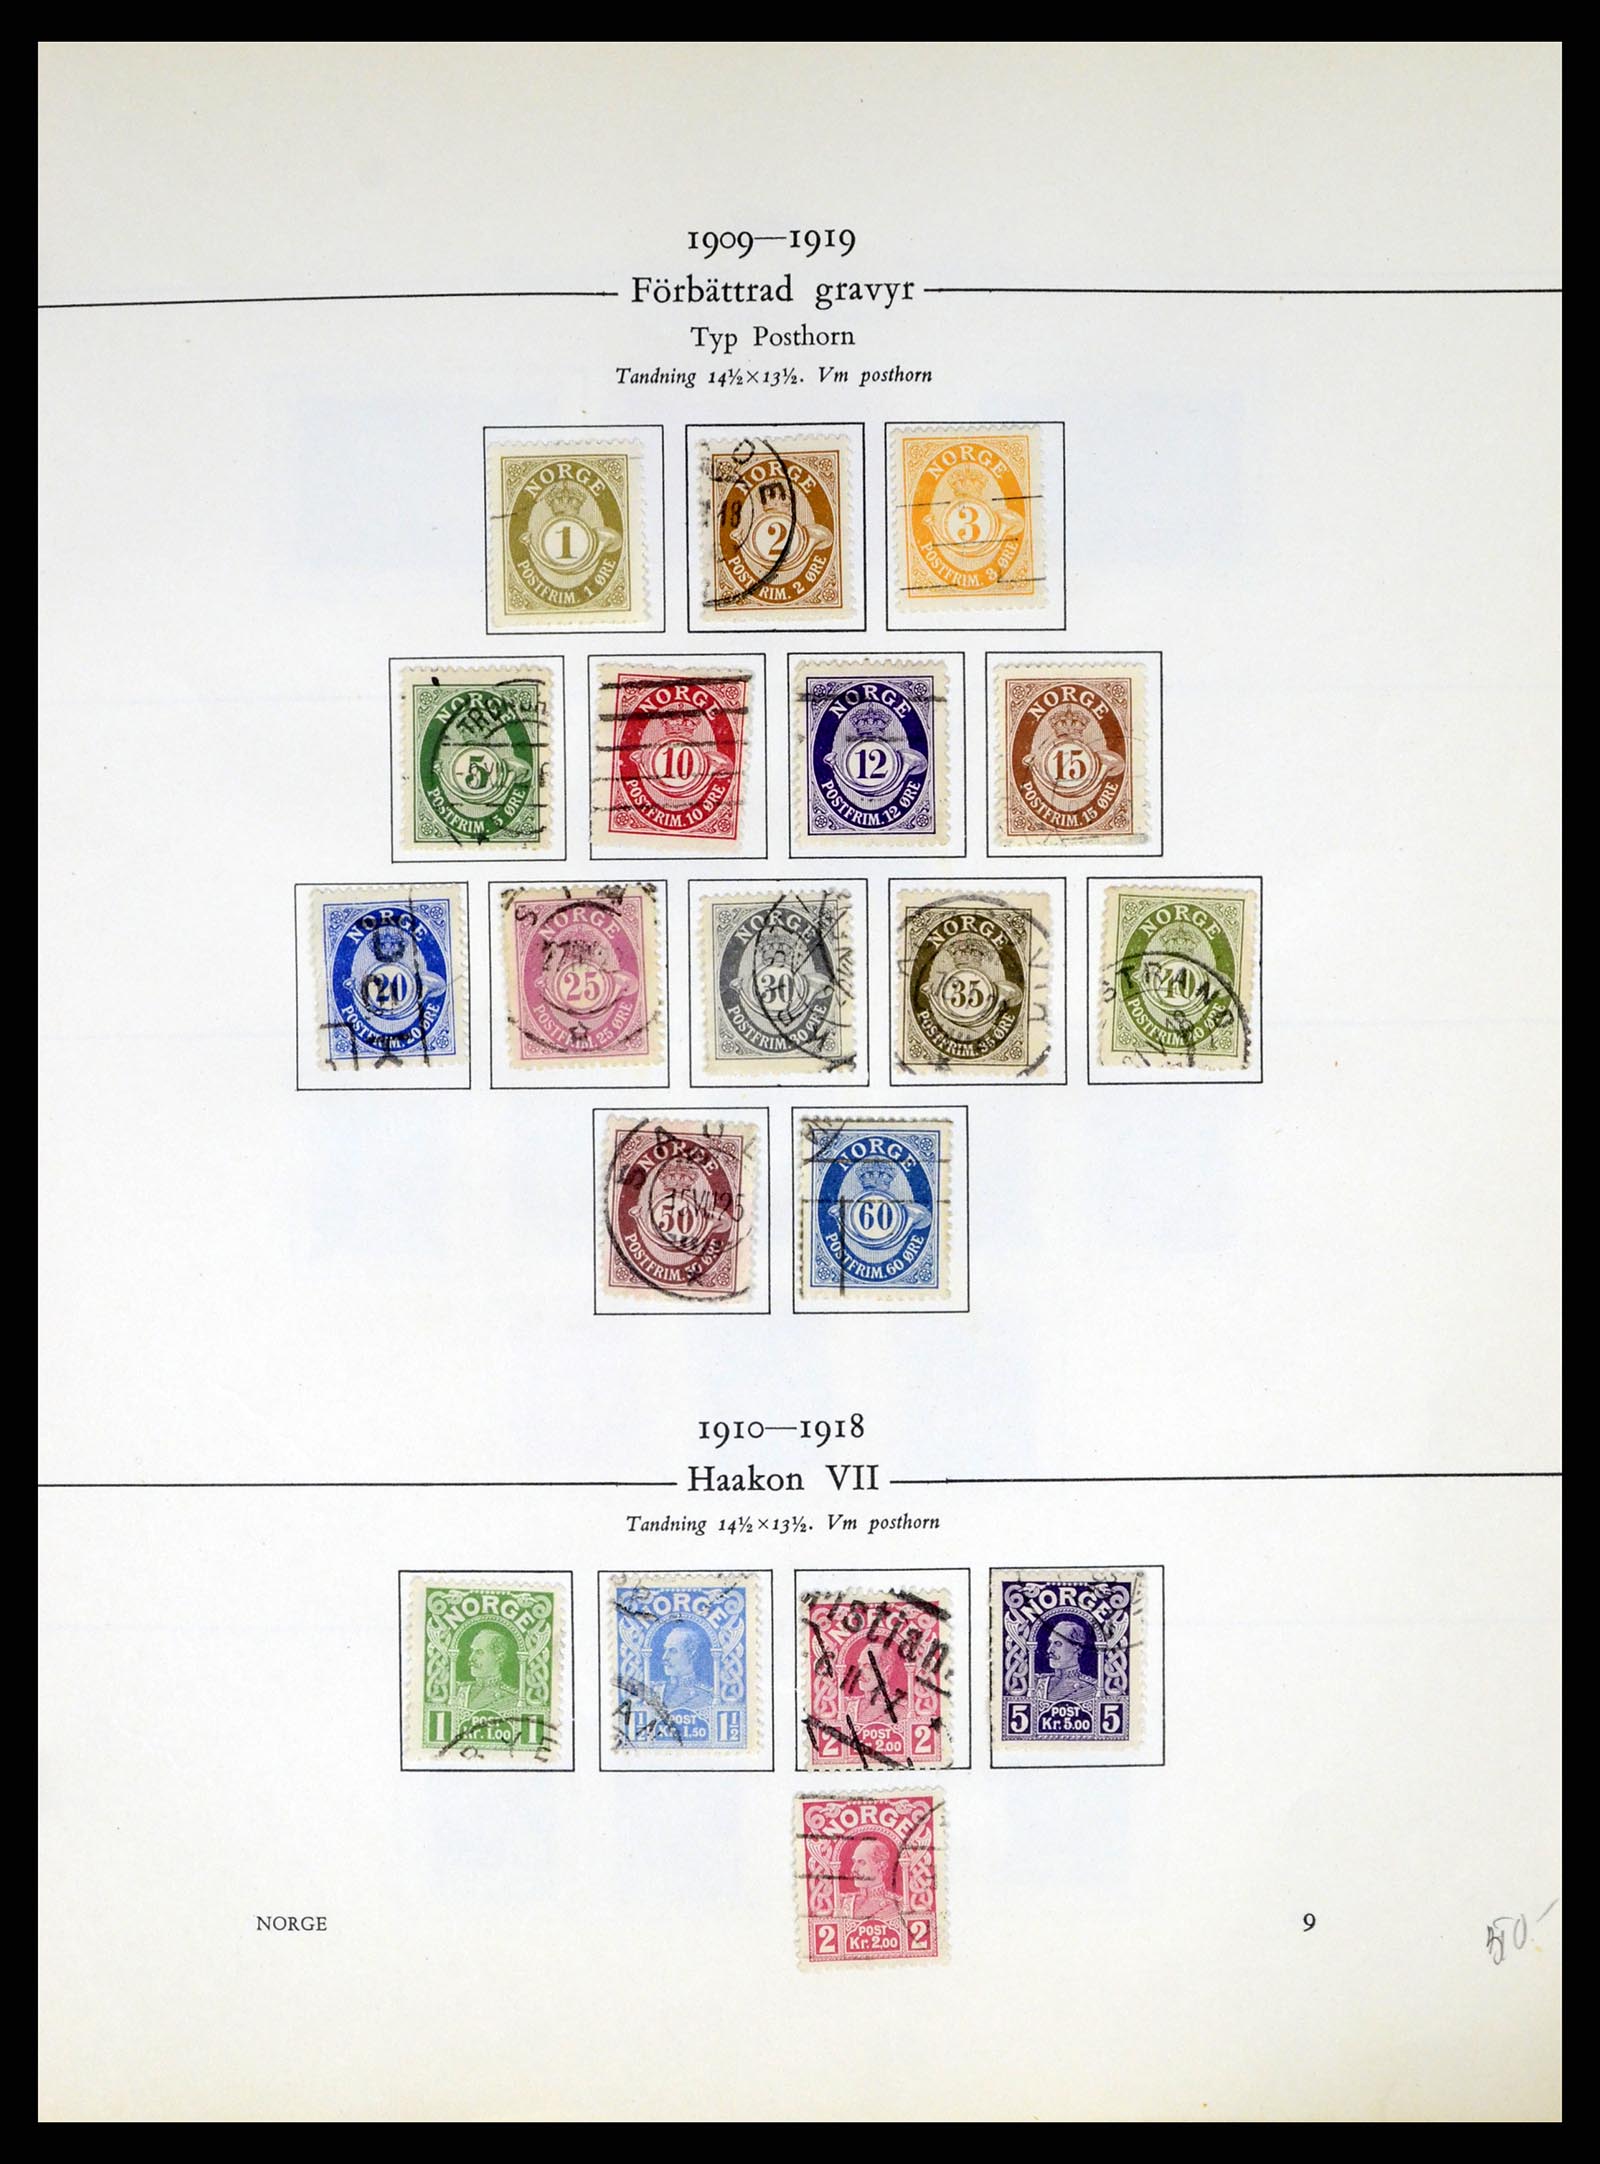 37387 009 - Stamp collection 37387 Scandinavia 1851-1960.